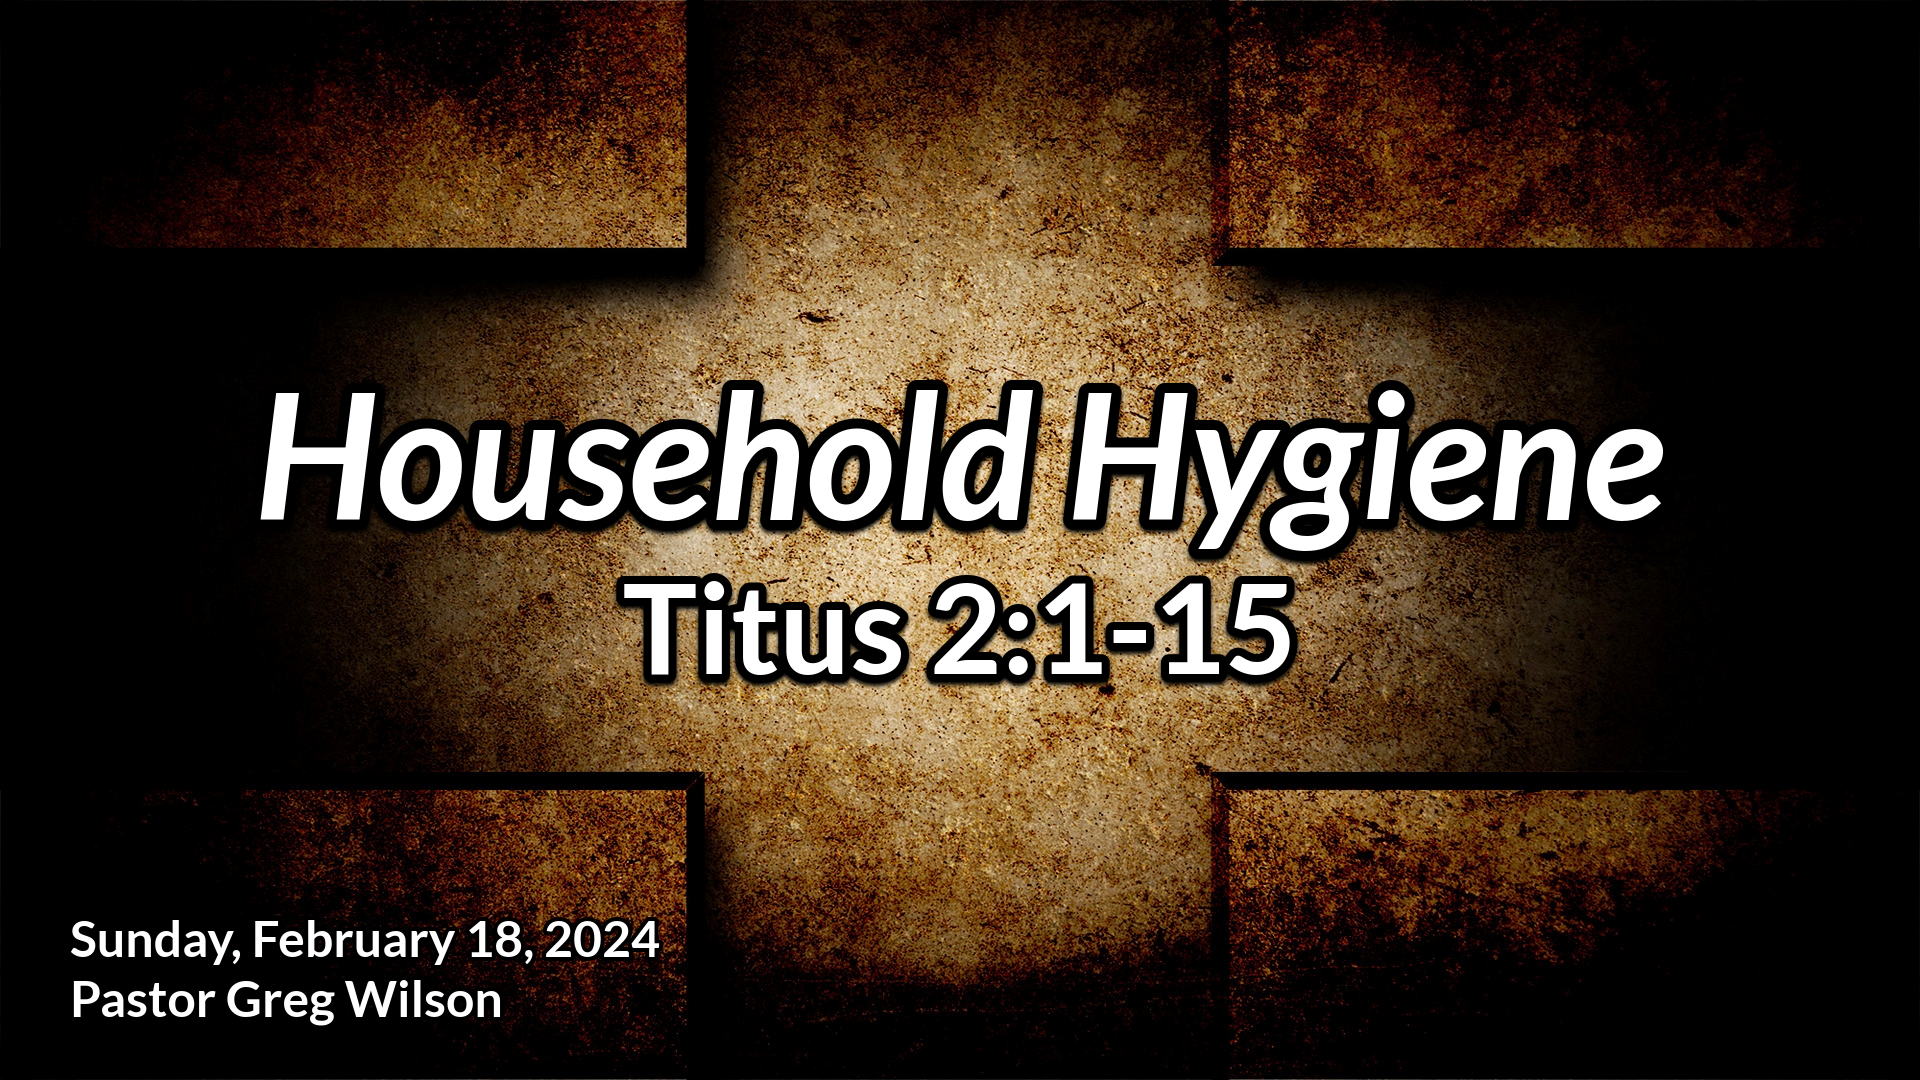 "Household Hygiene"